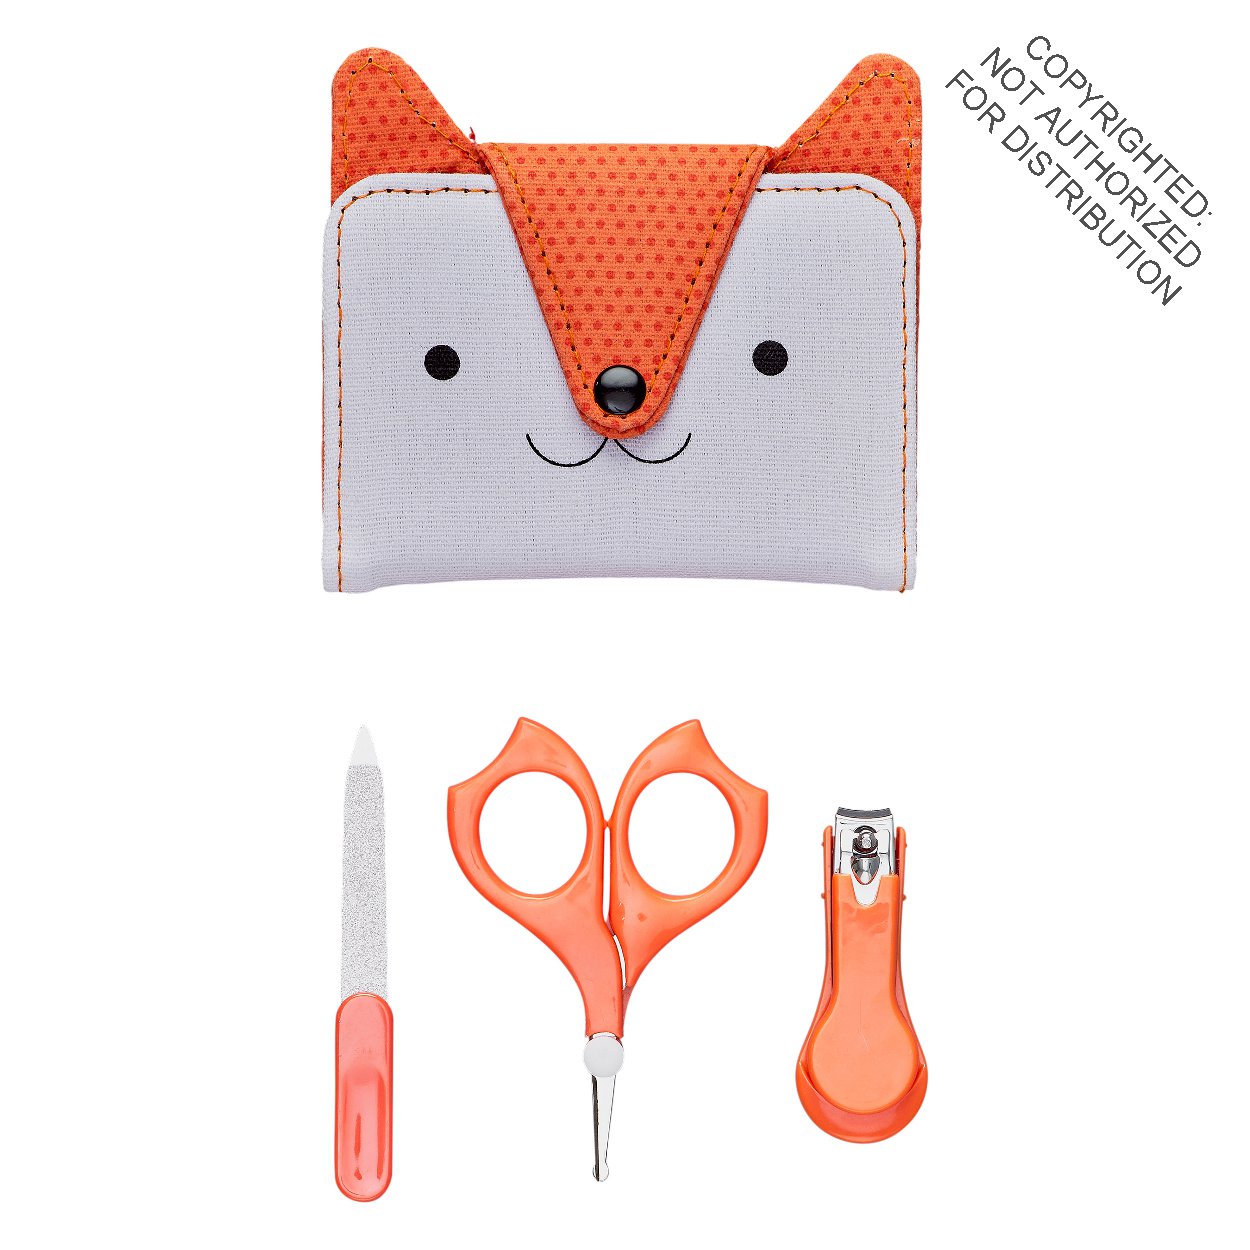 Dapper Fox Baby Manicure Set